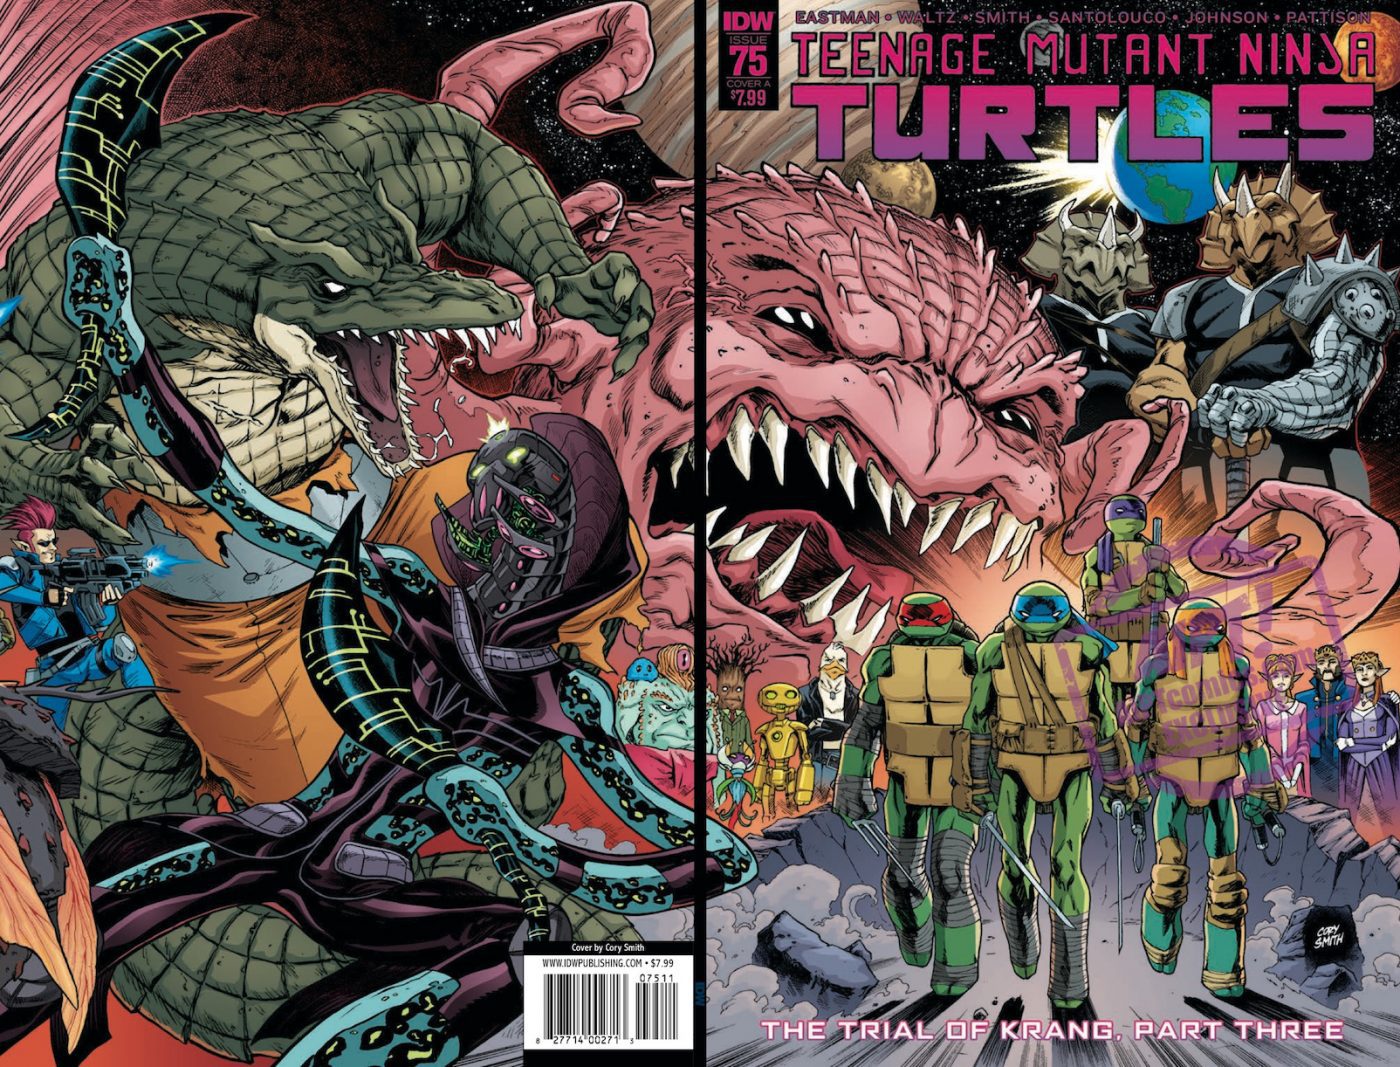 Teenage Mutant Ninja Turtles #75 Review